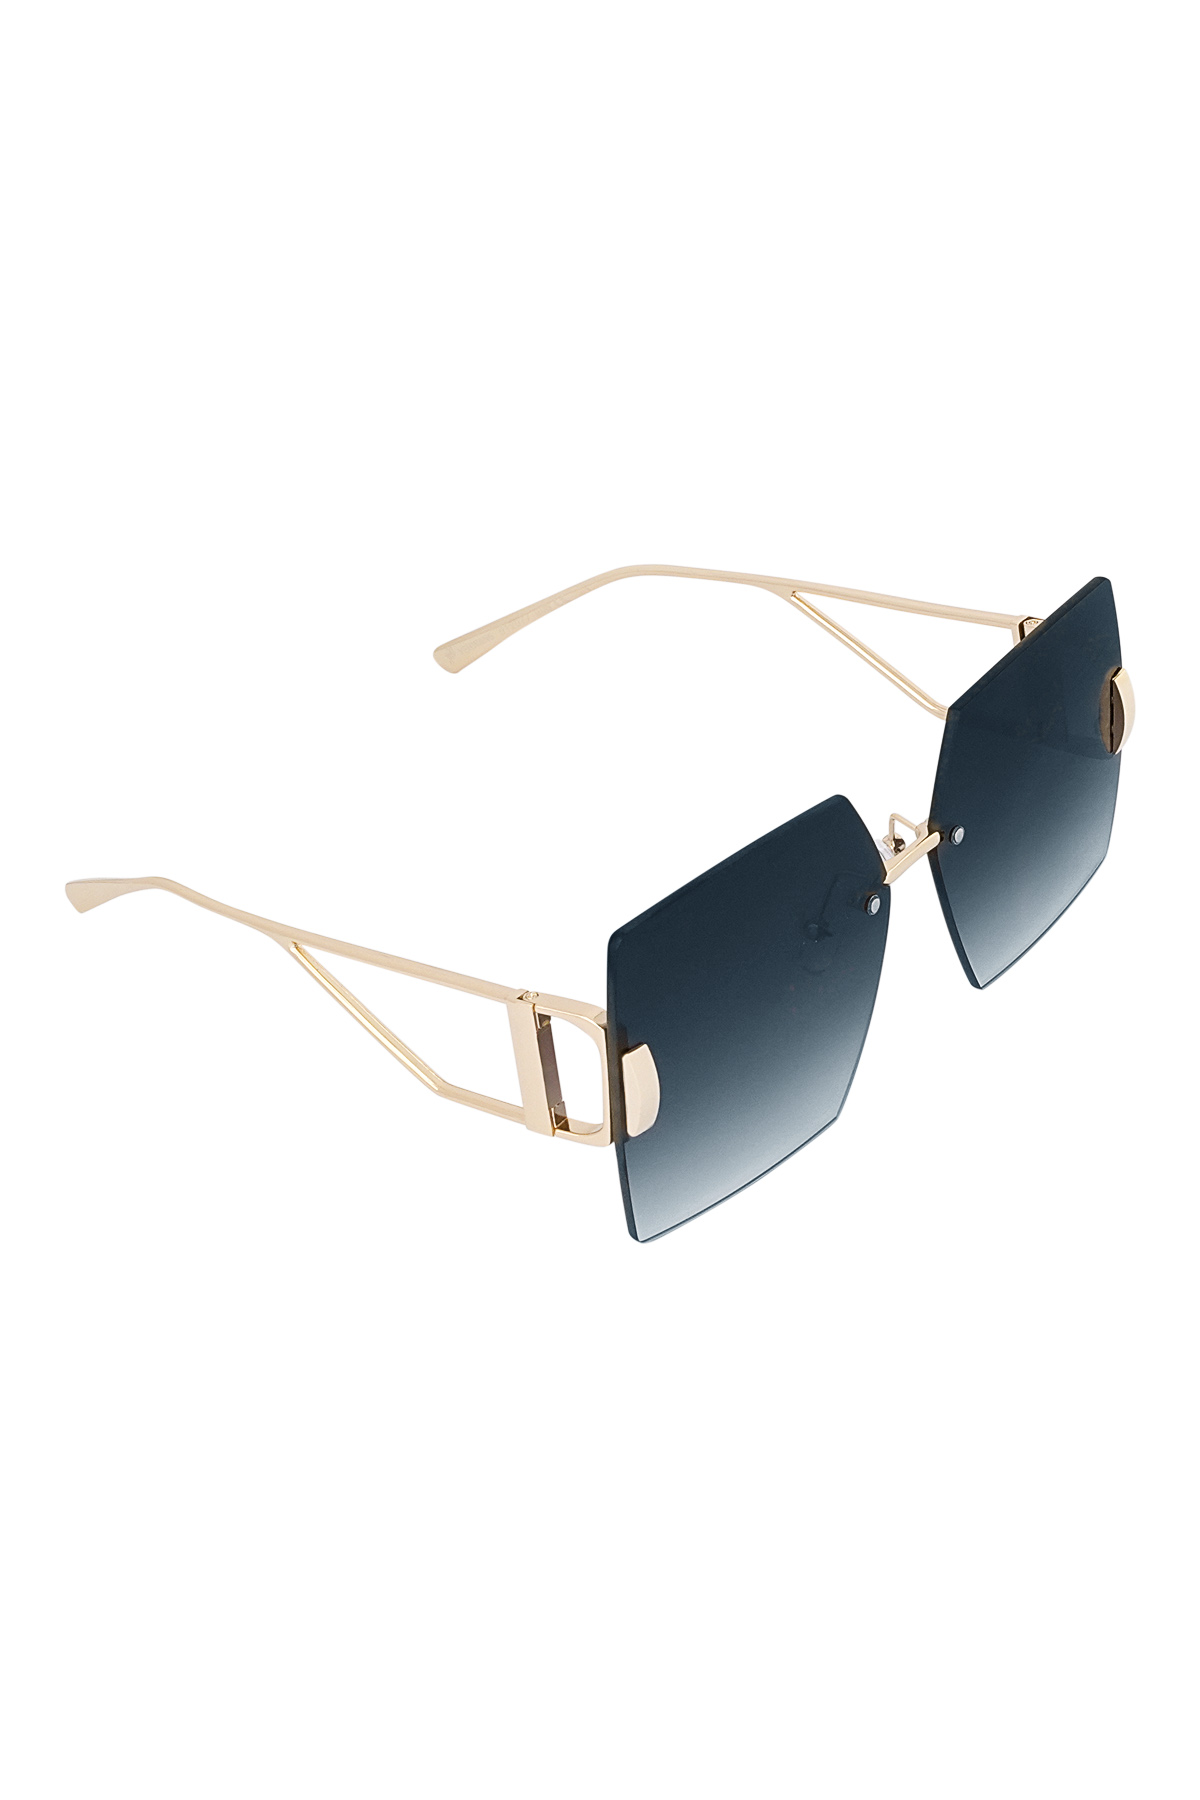 Rimless square sunglasses - black/gold